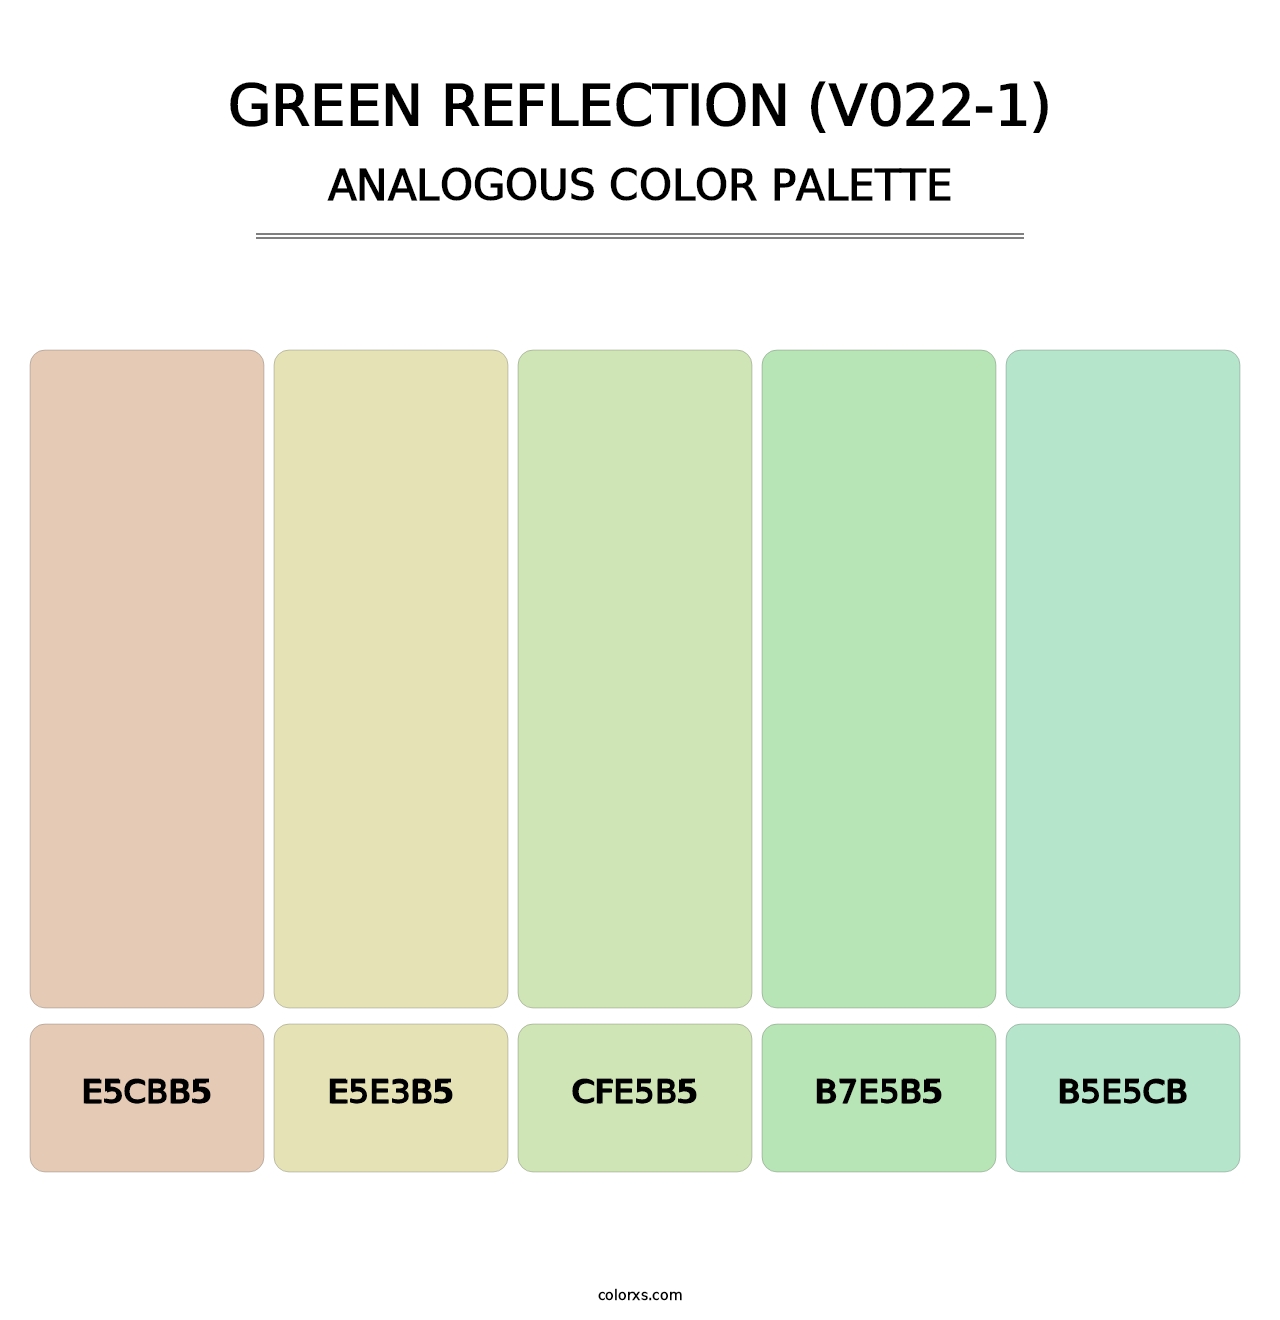 Green Reflection (V022-1) - Analogous Color Palette